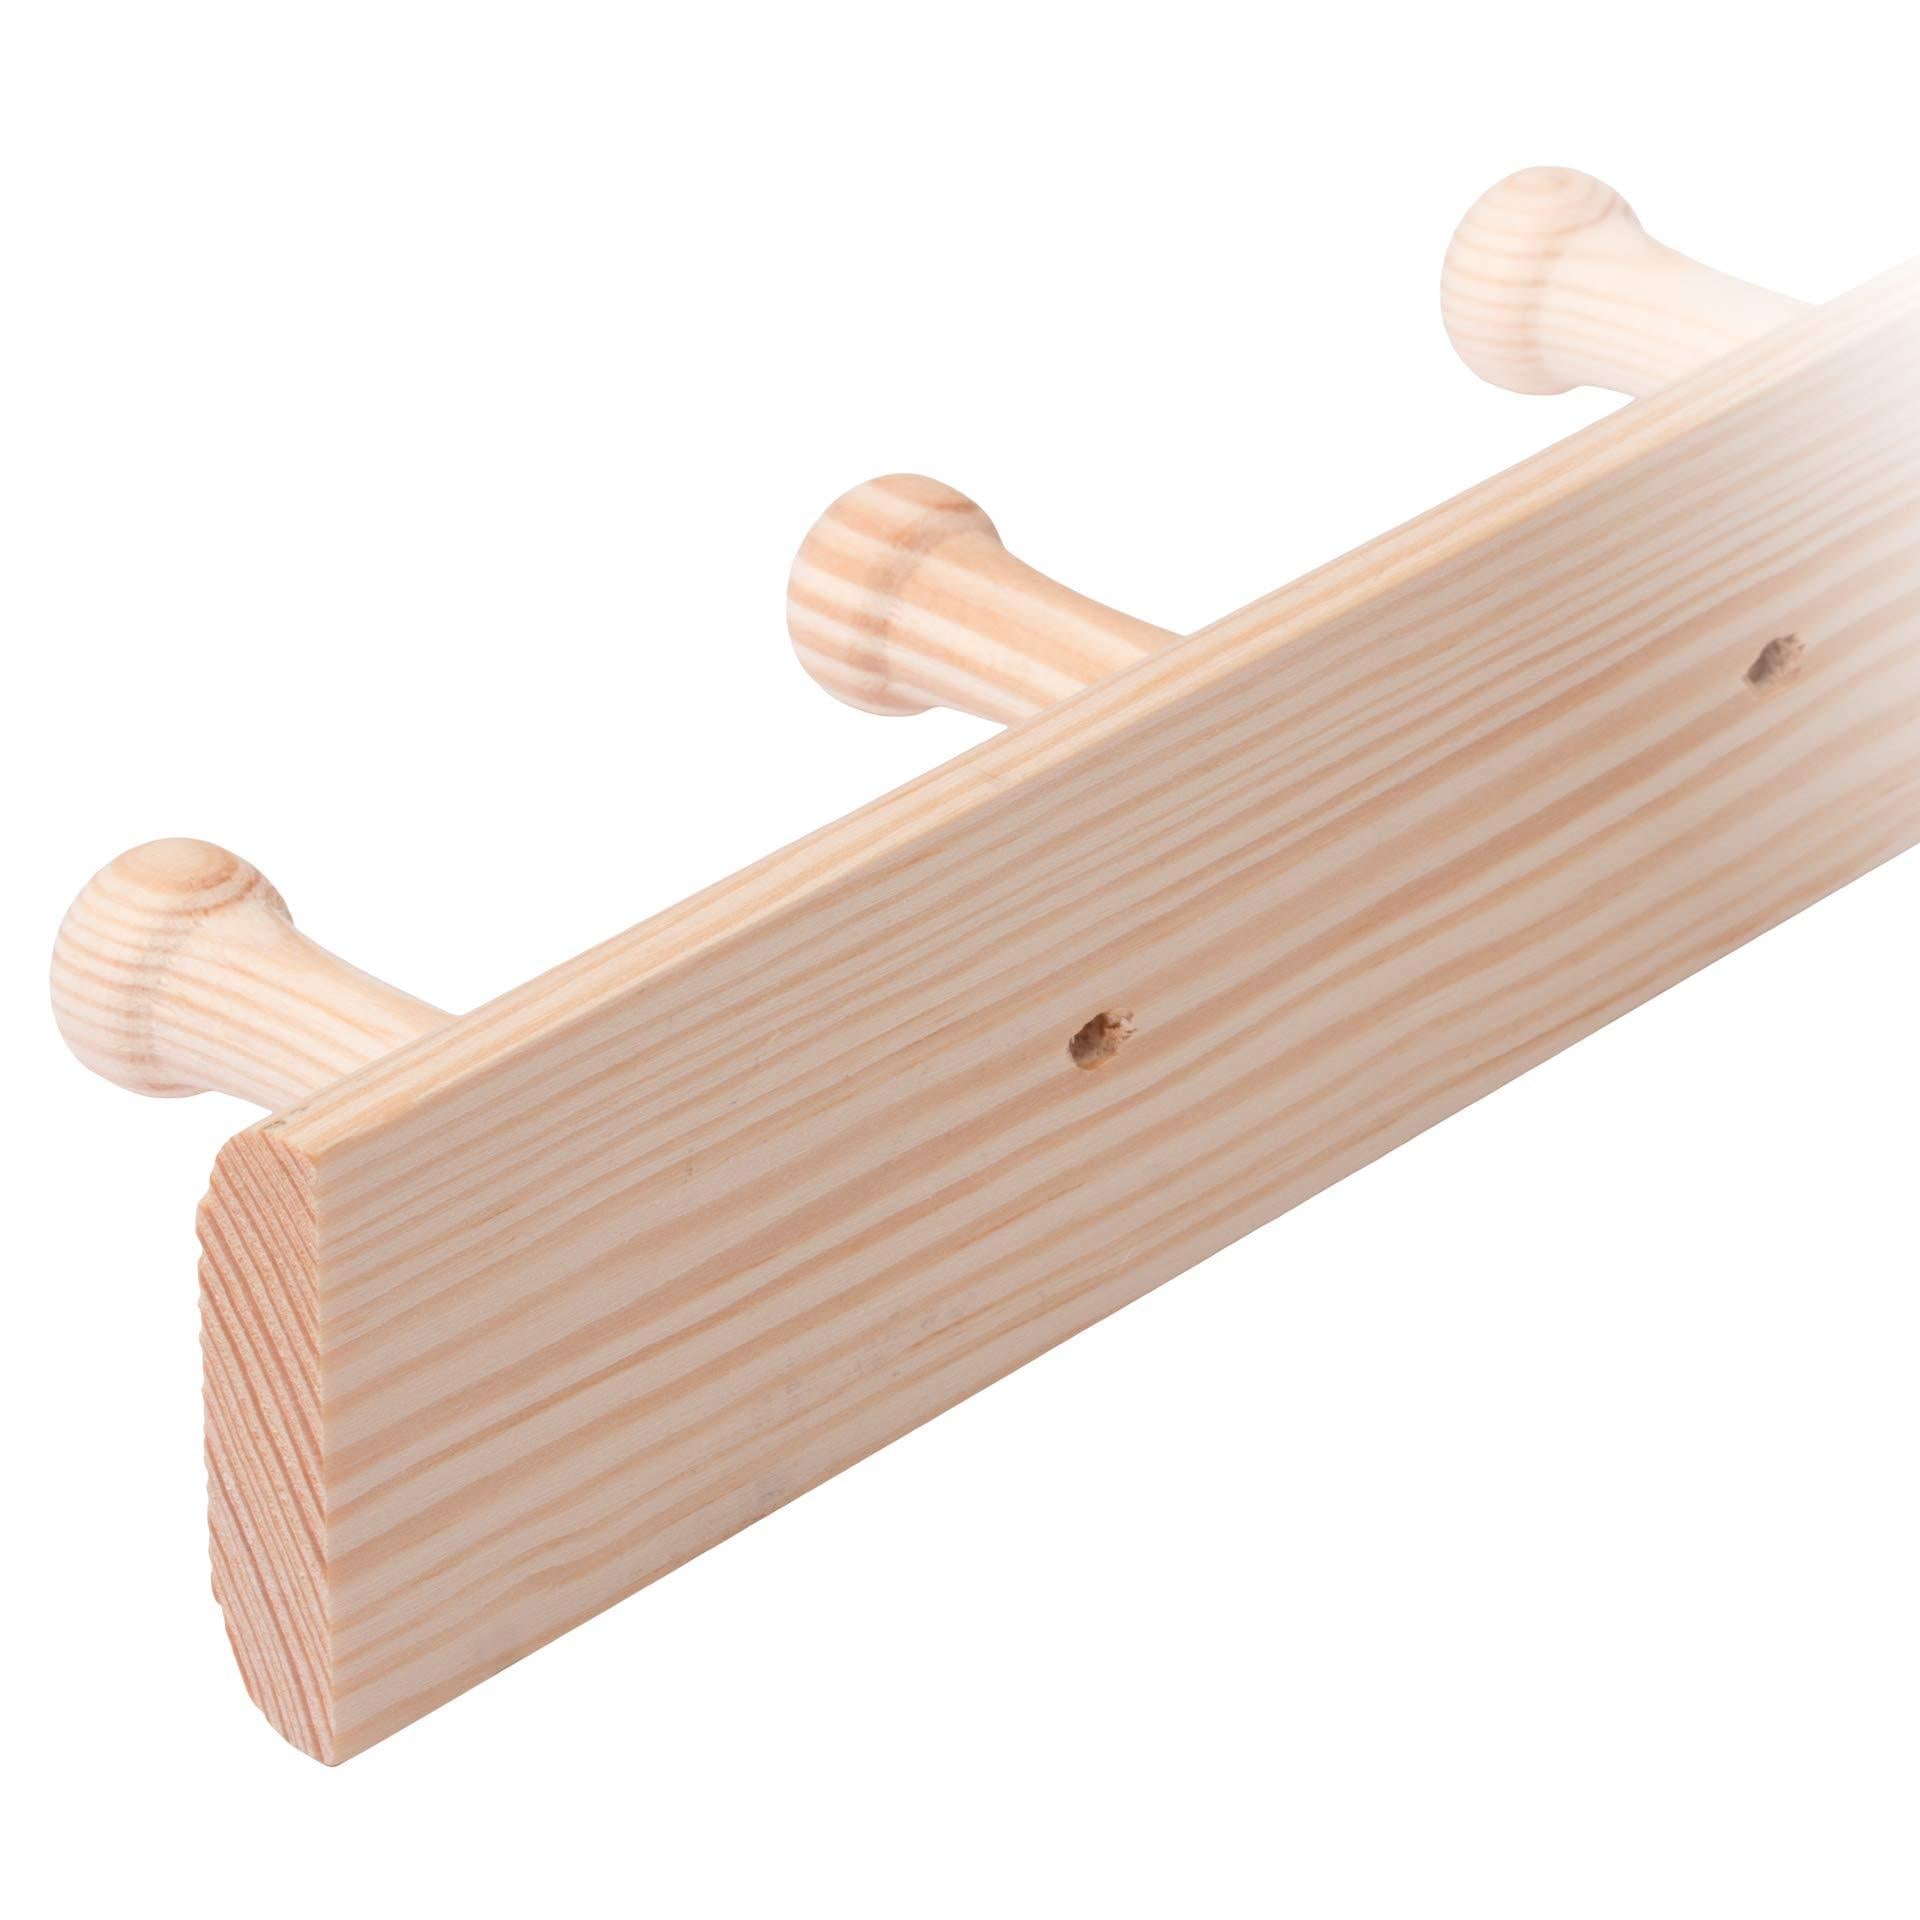 LouMaxx Hakenleiste Holz aus Kiefer mit 3 Holzhaken – Wandgarderobe Holz - Garderobe Kinder - Garderobe Holz - Kleiderhaken Holz zur Wandbefestigung